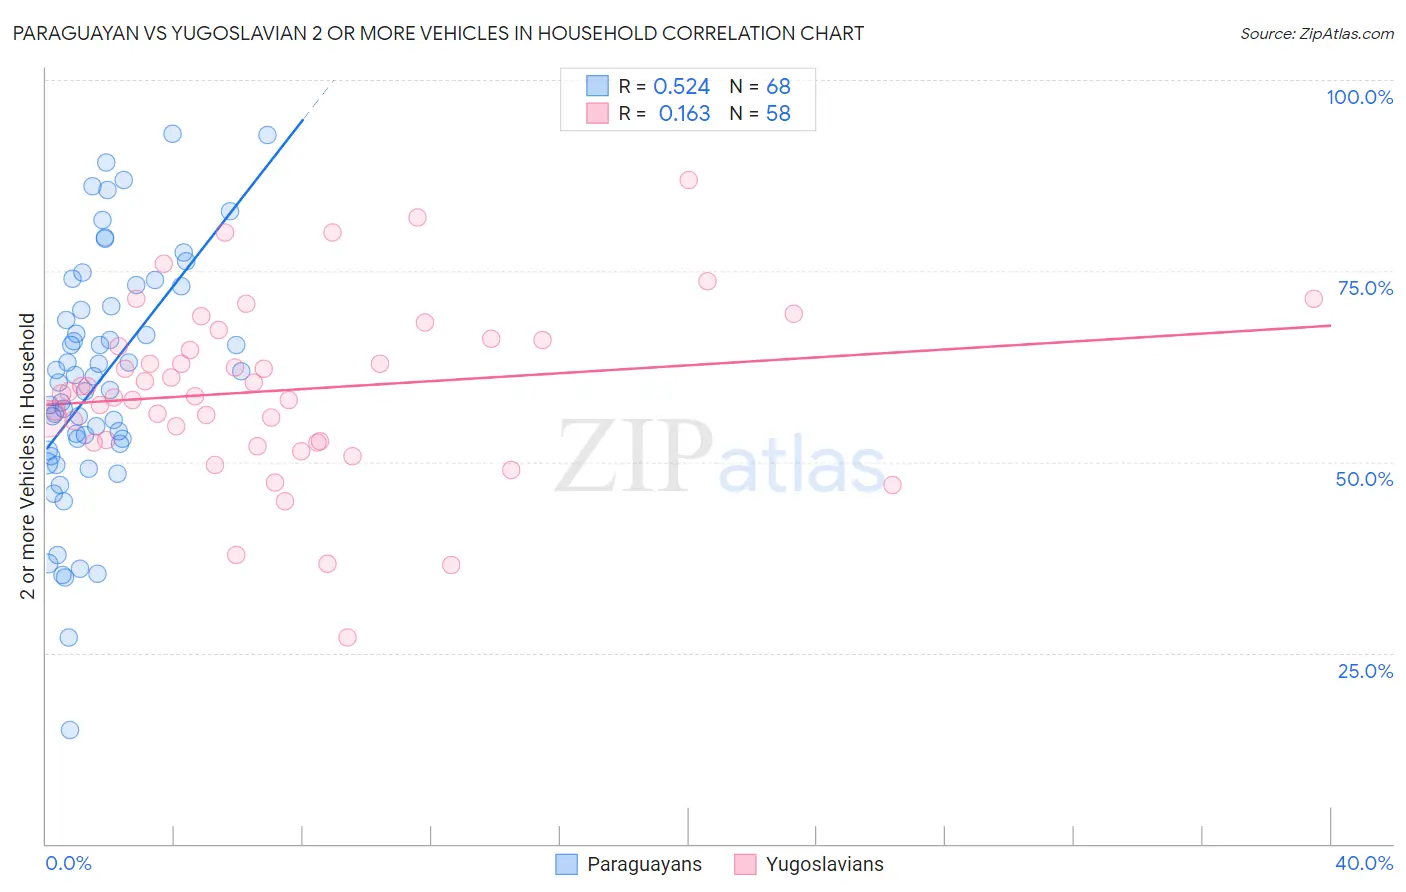 Paraguayan vs Yugoslavian 2 or more Vehicles in Household